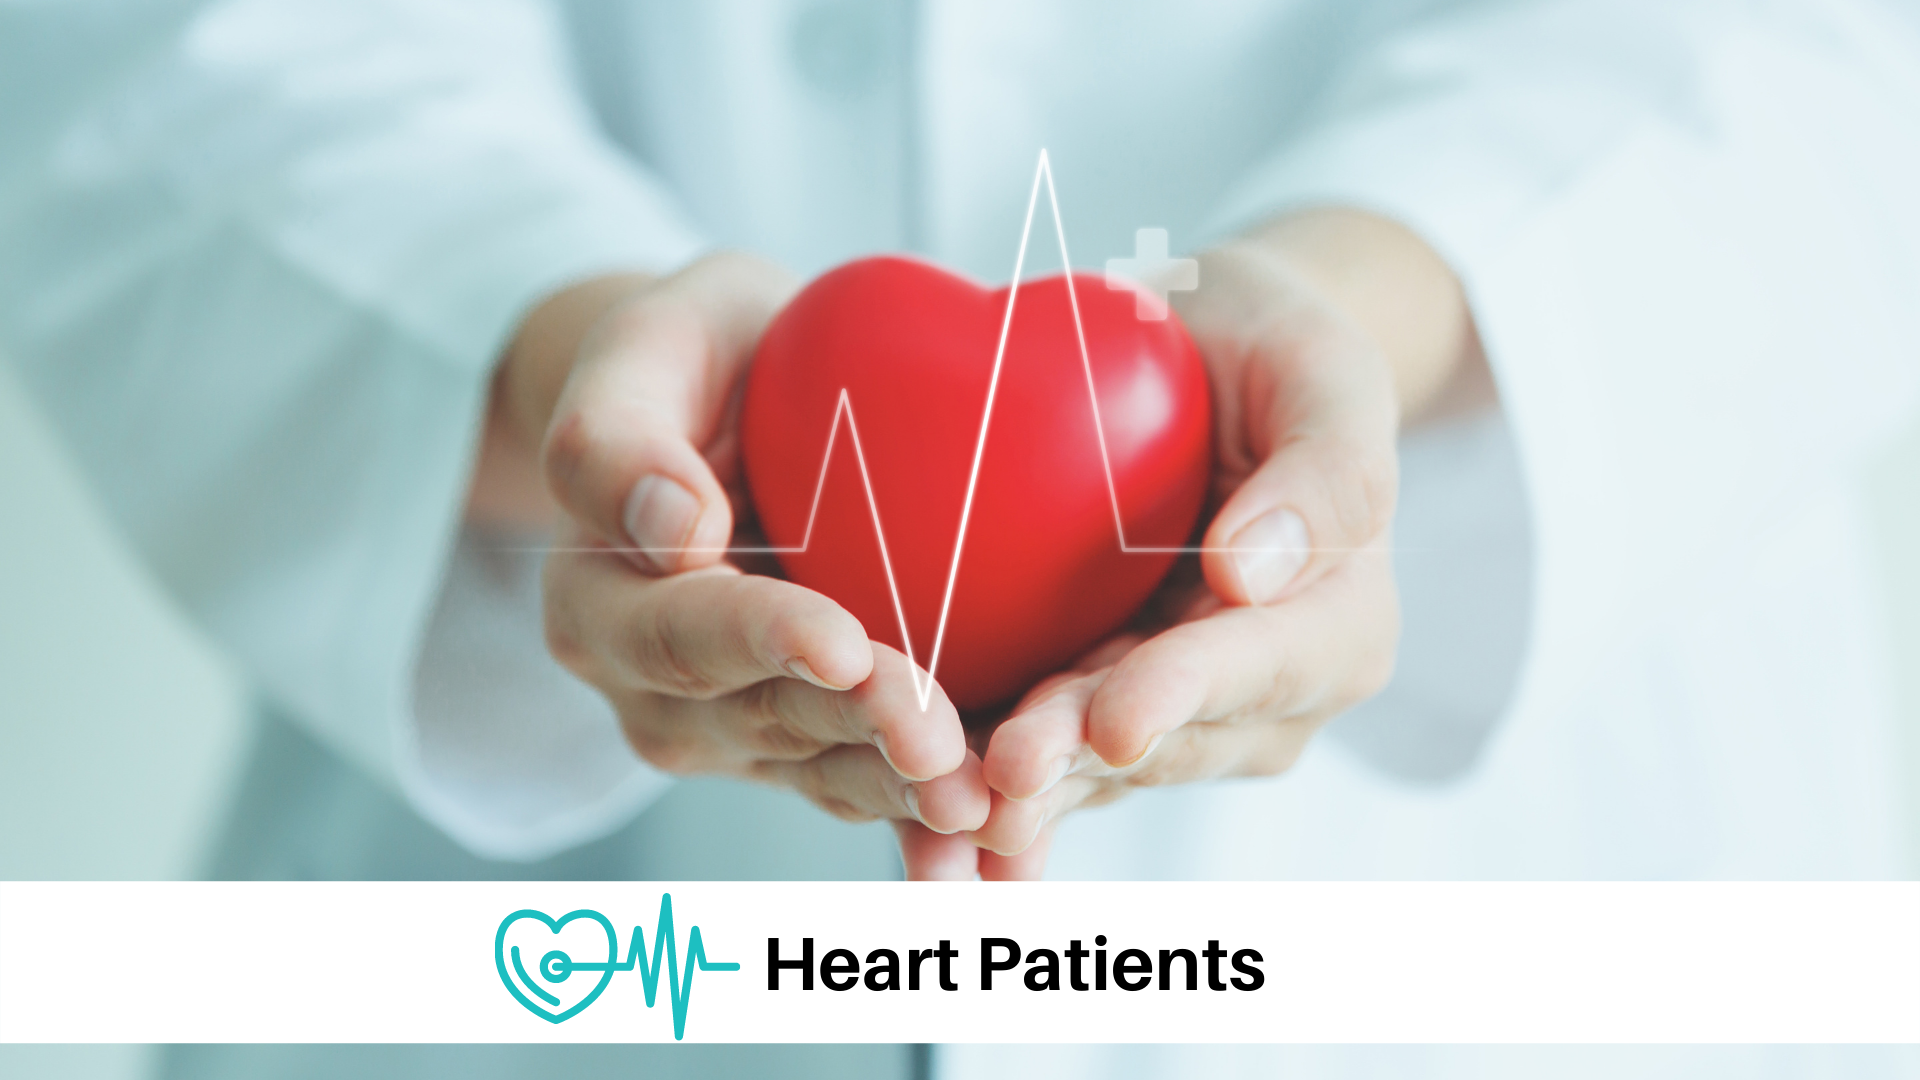 Heart patients